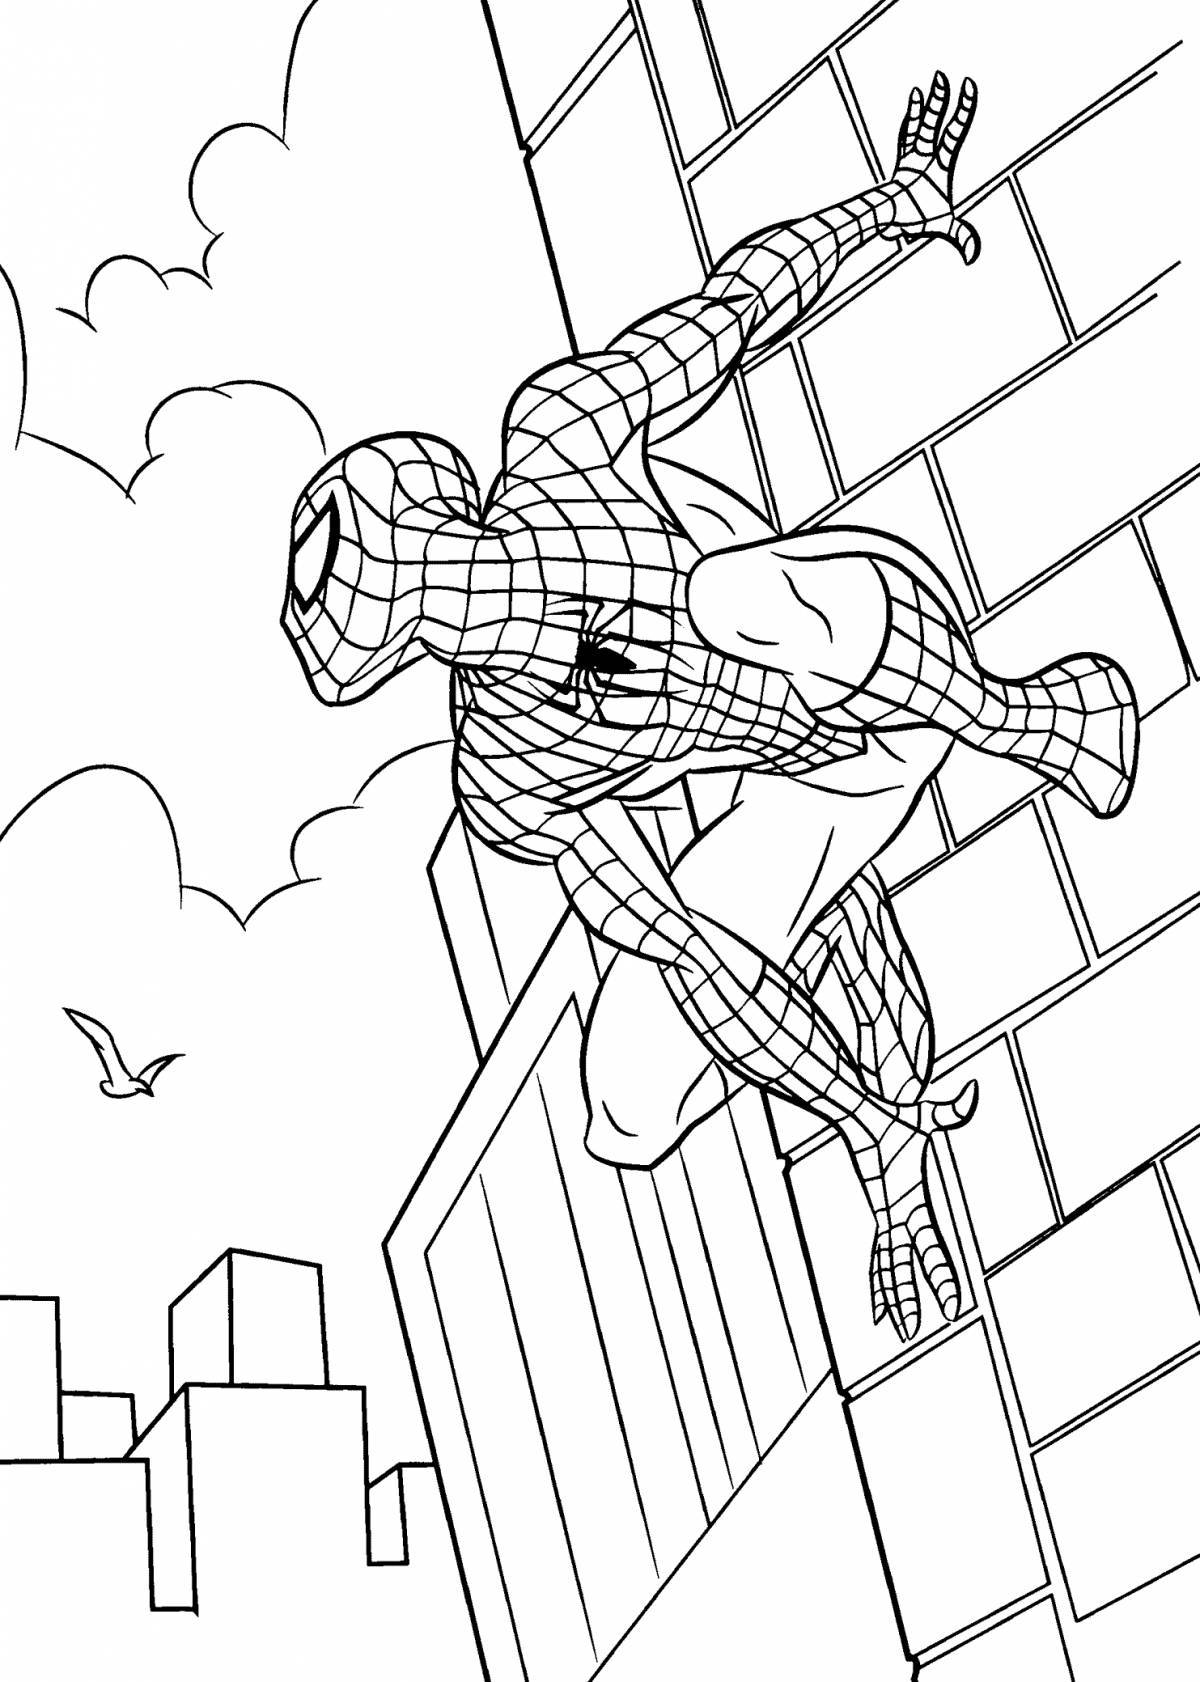 Spider-man superb coloring book